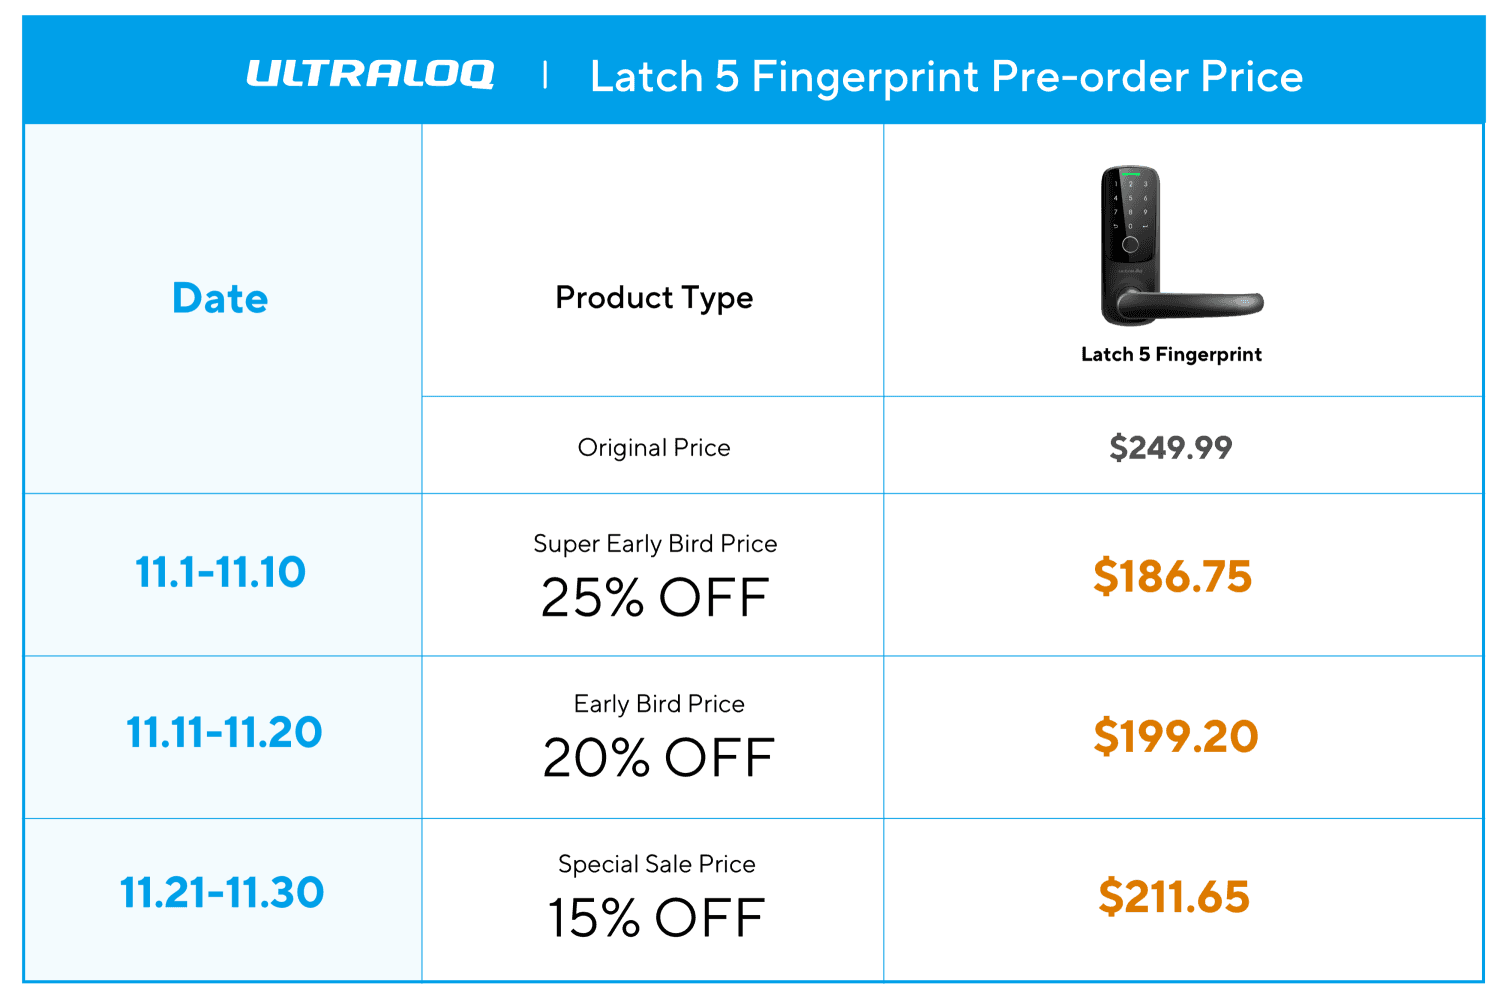 Latch 5 Fingerprint Deal Price